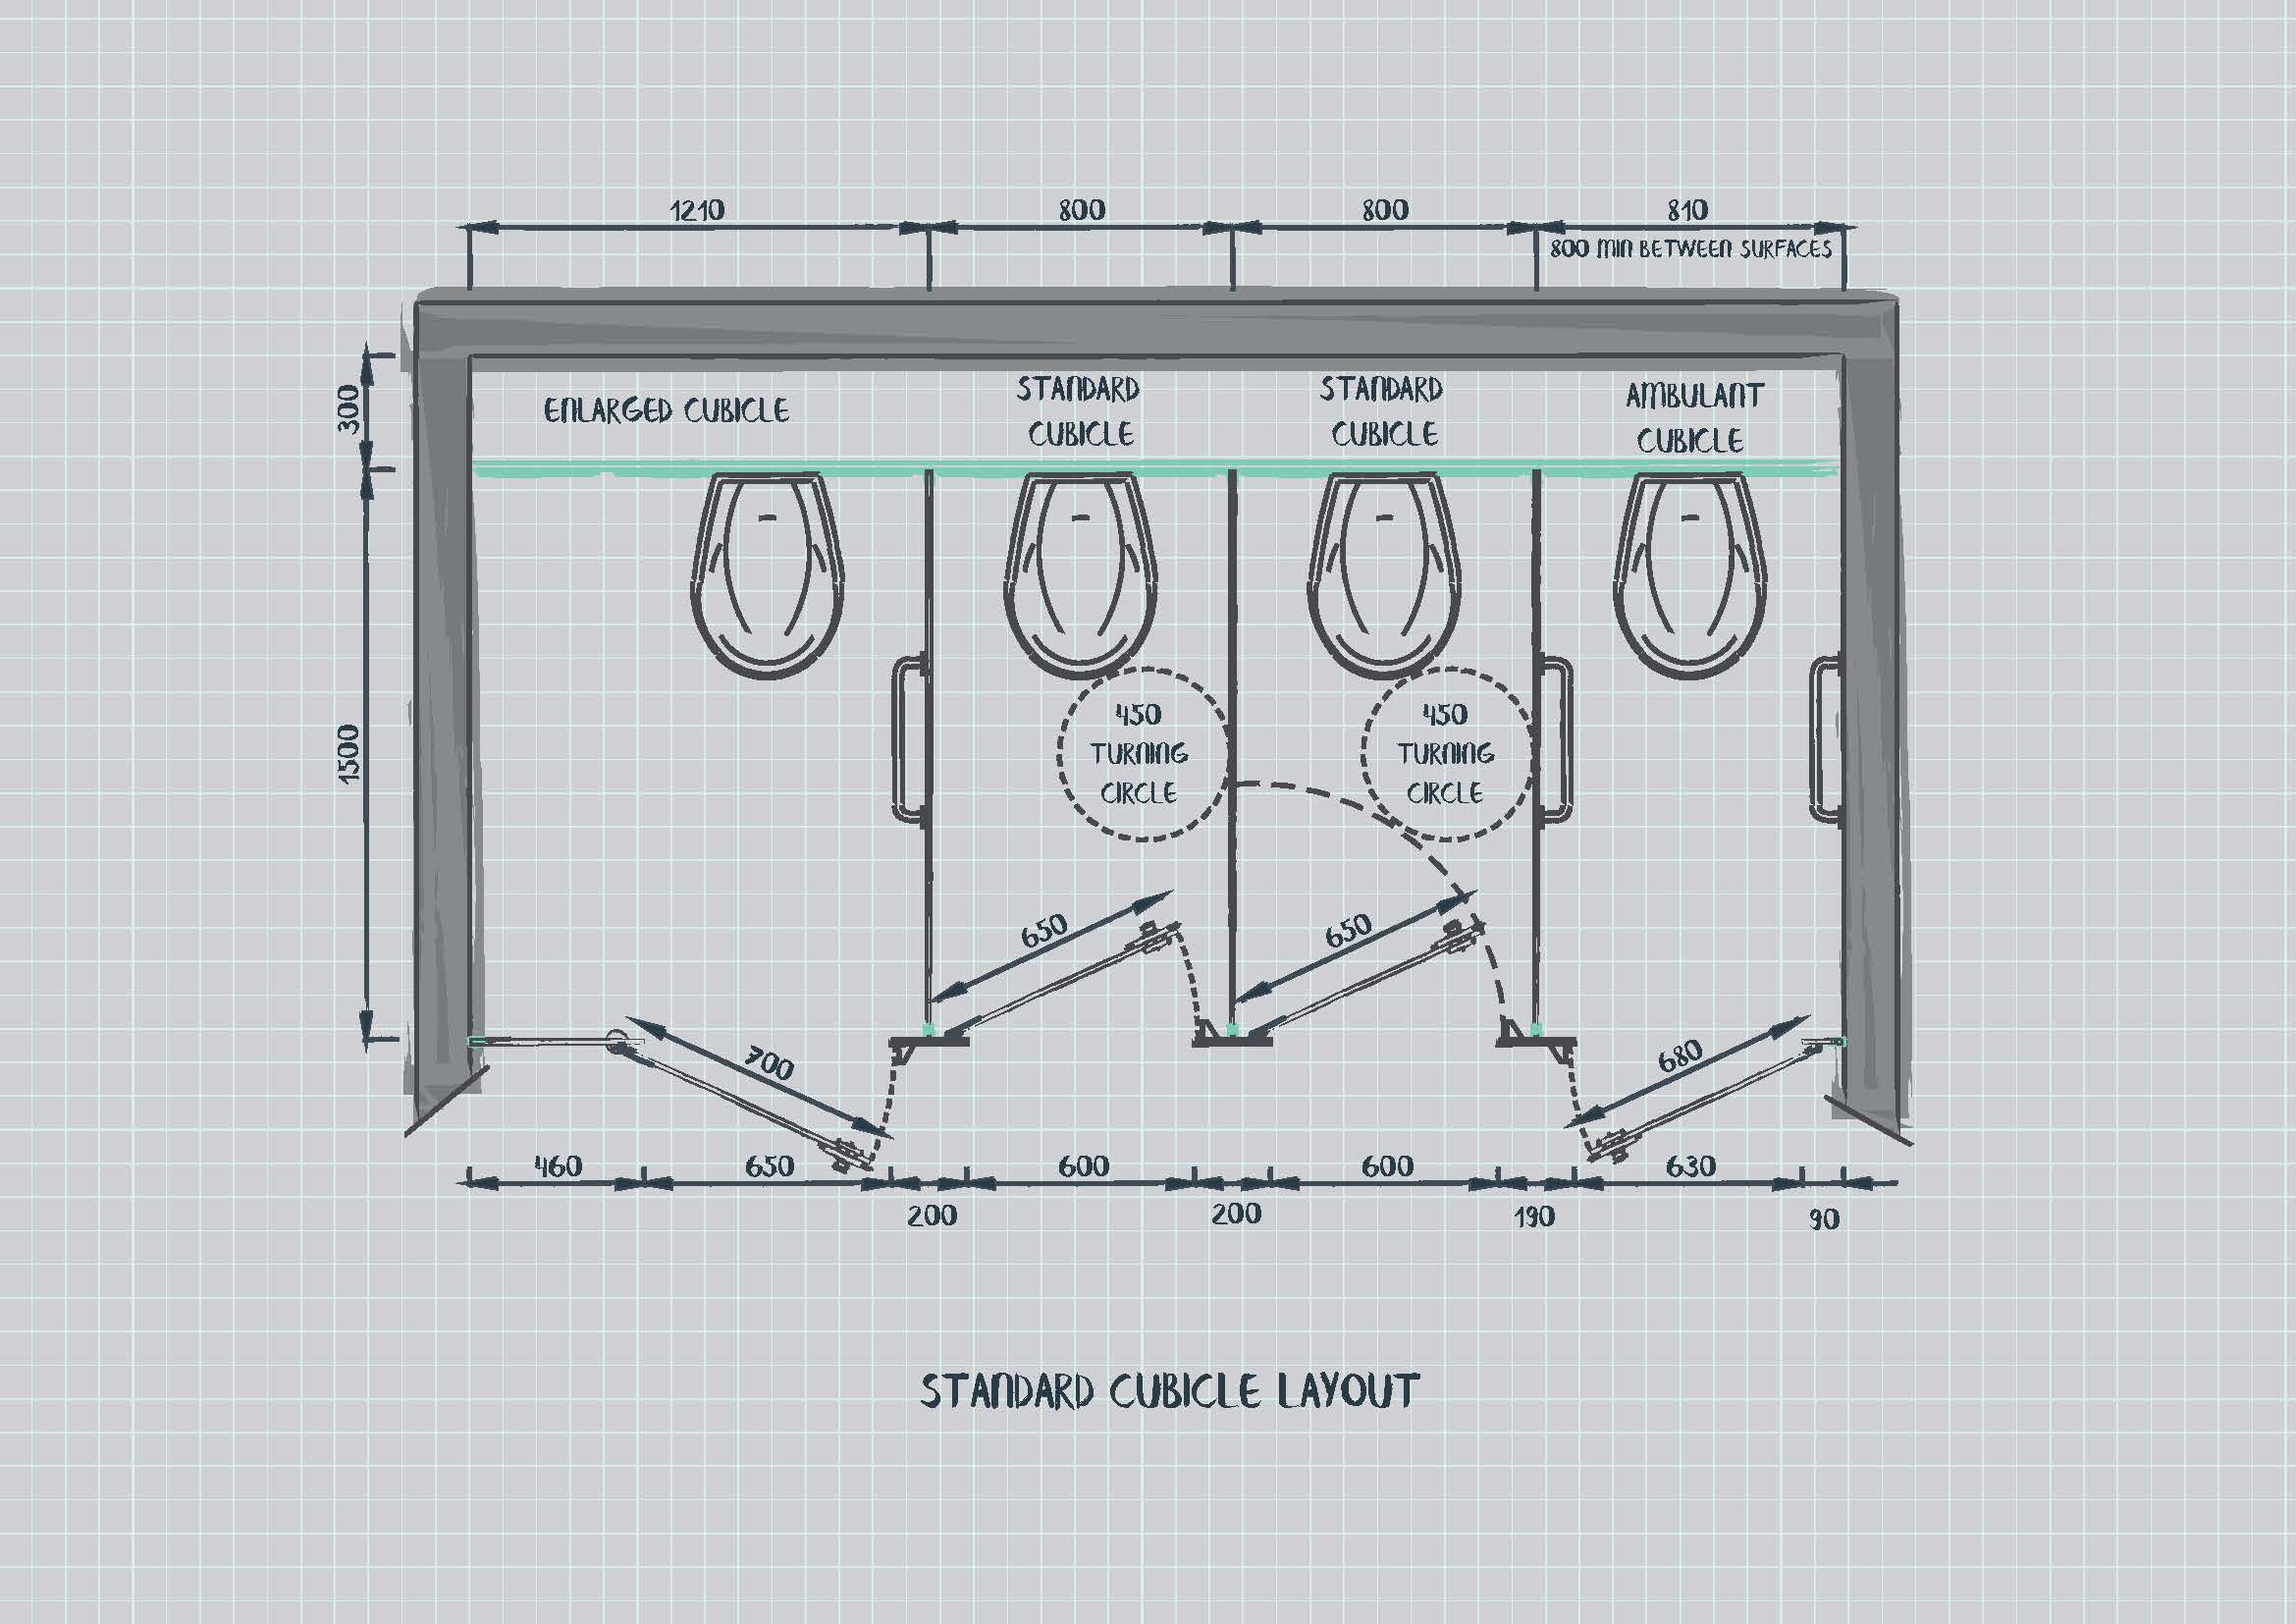 Toilet cubicle dimensions